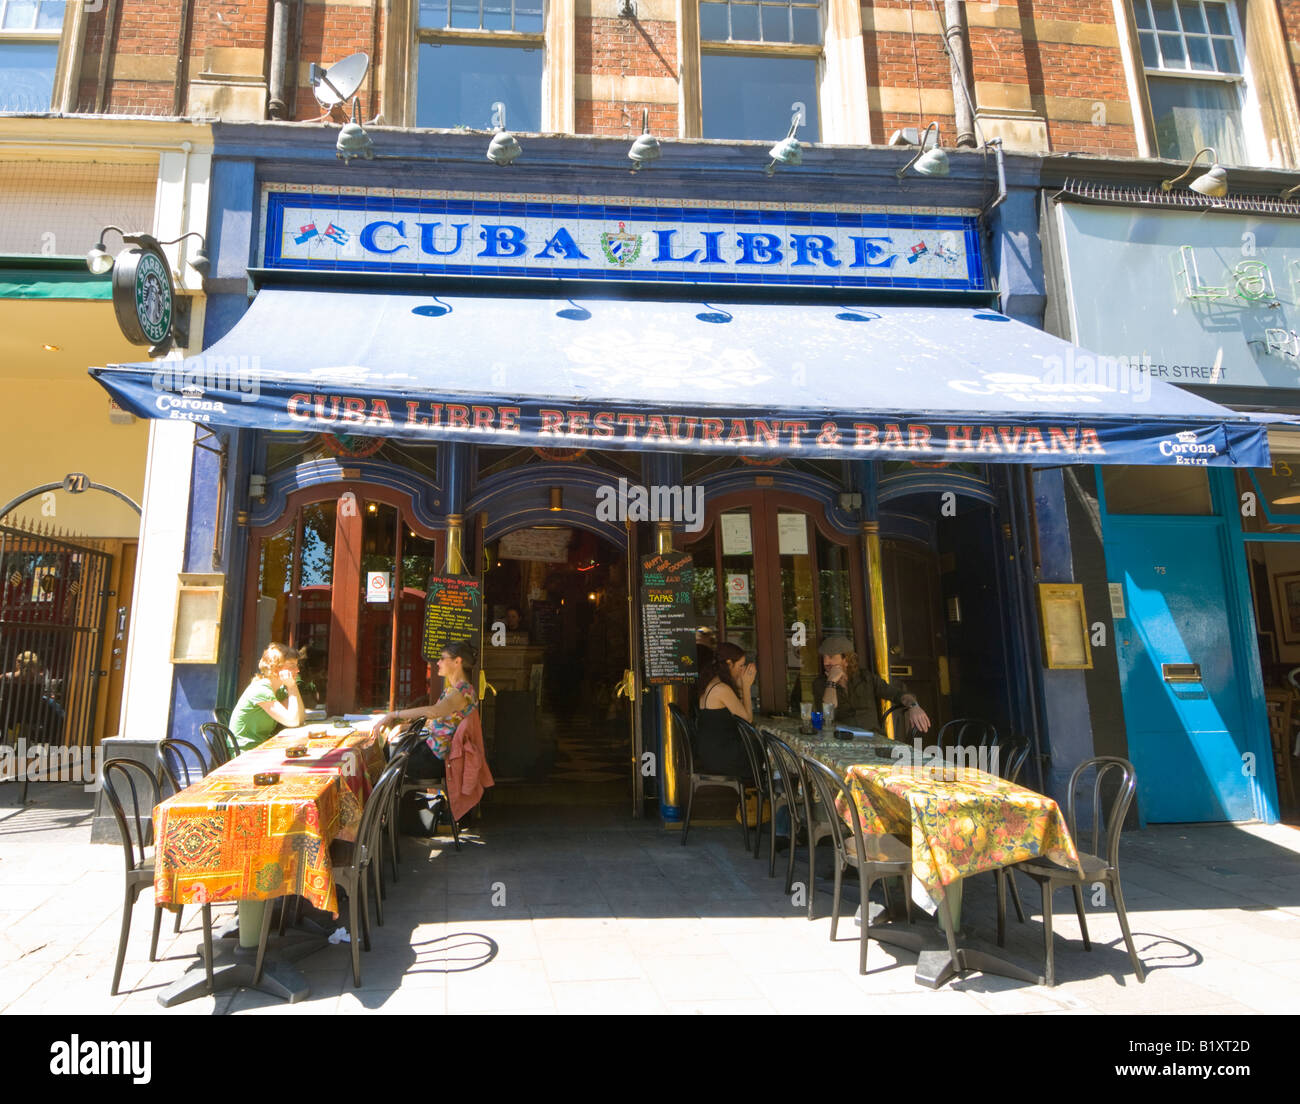 Cuba Libre Restaurant Upper Street Islington London Stockfoto